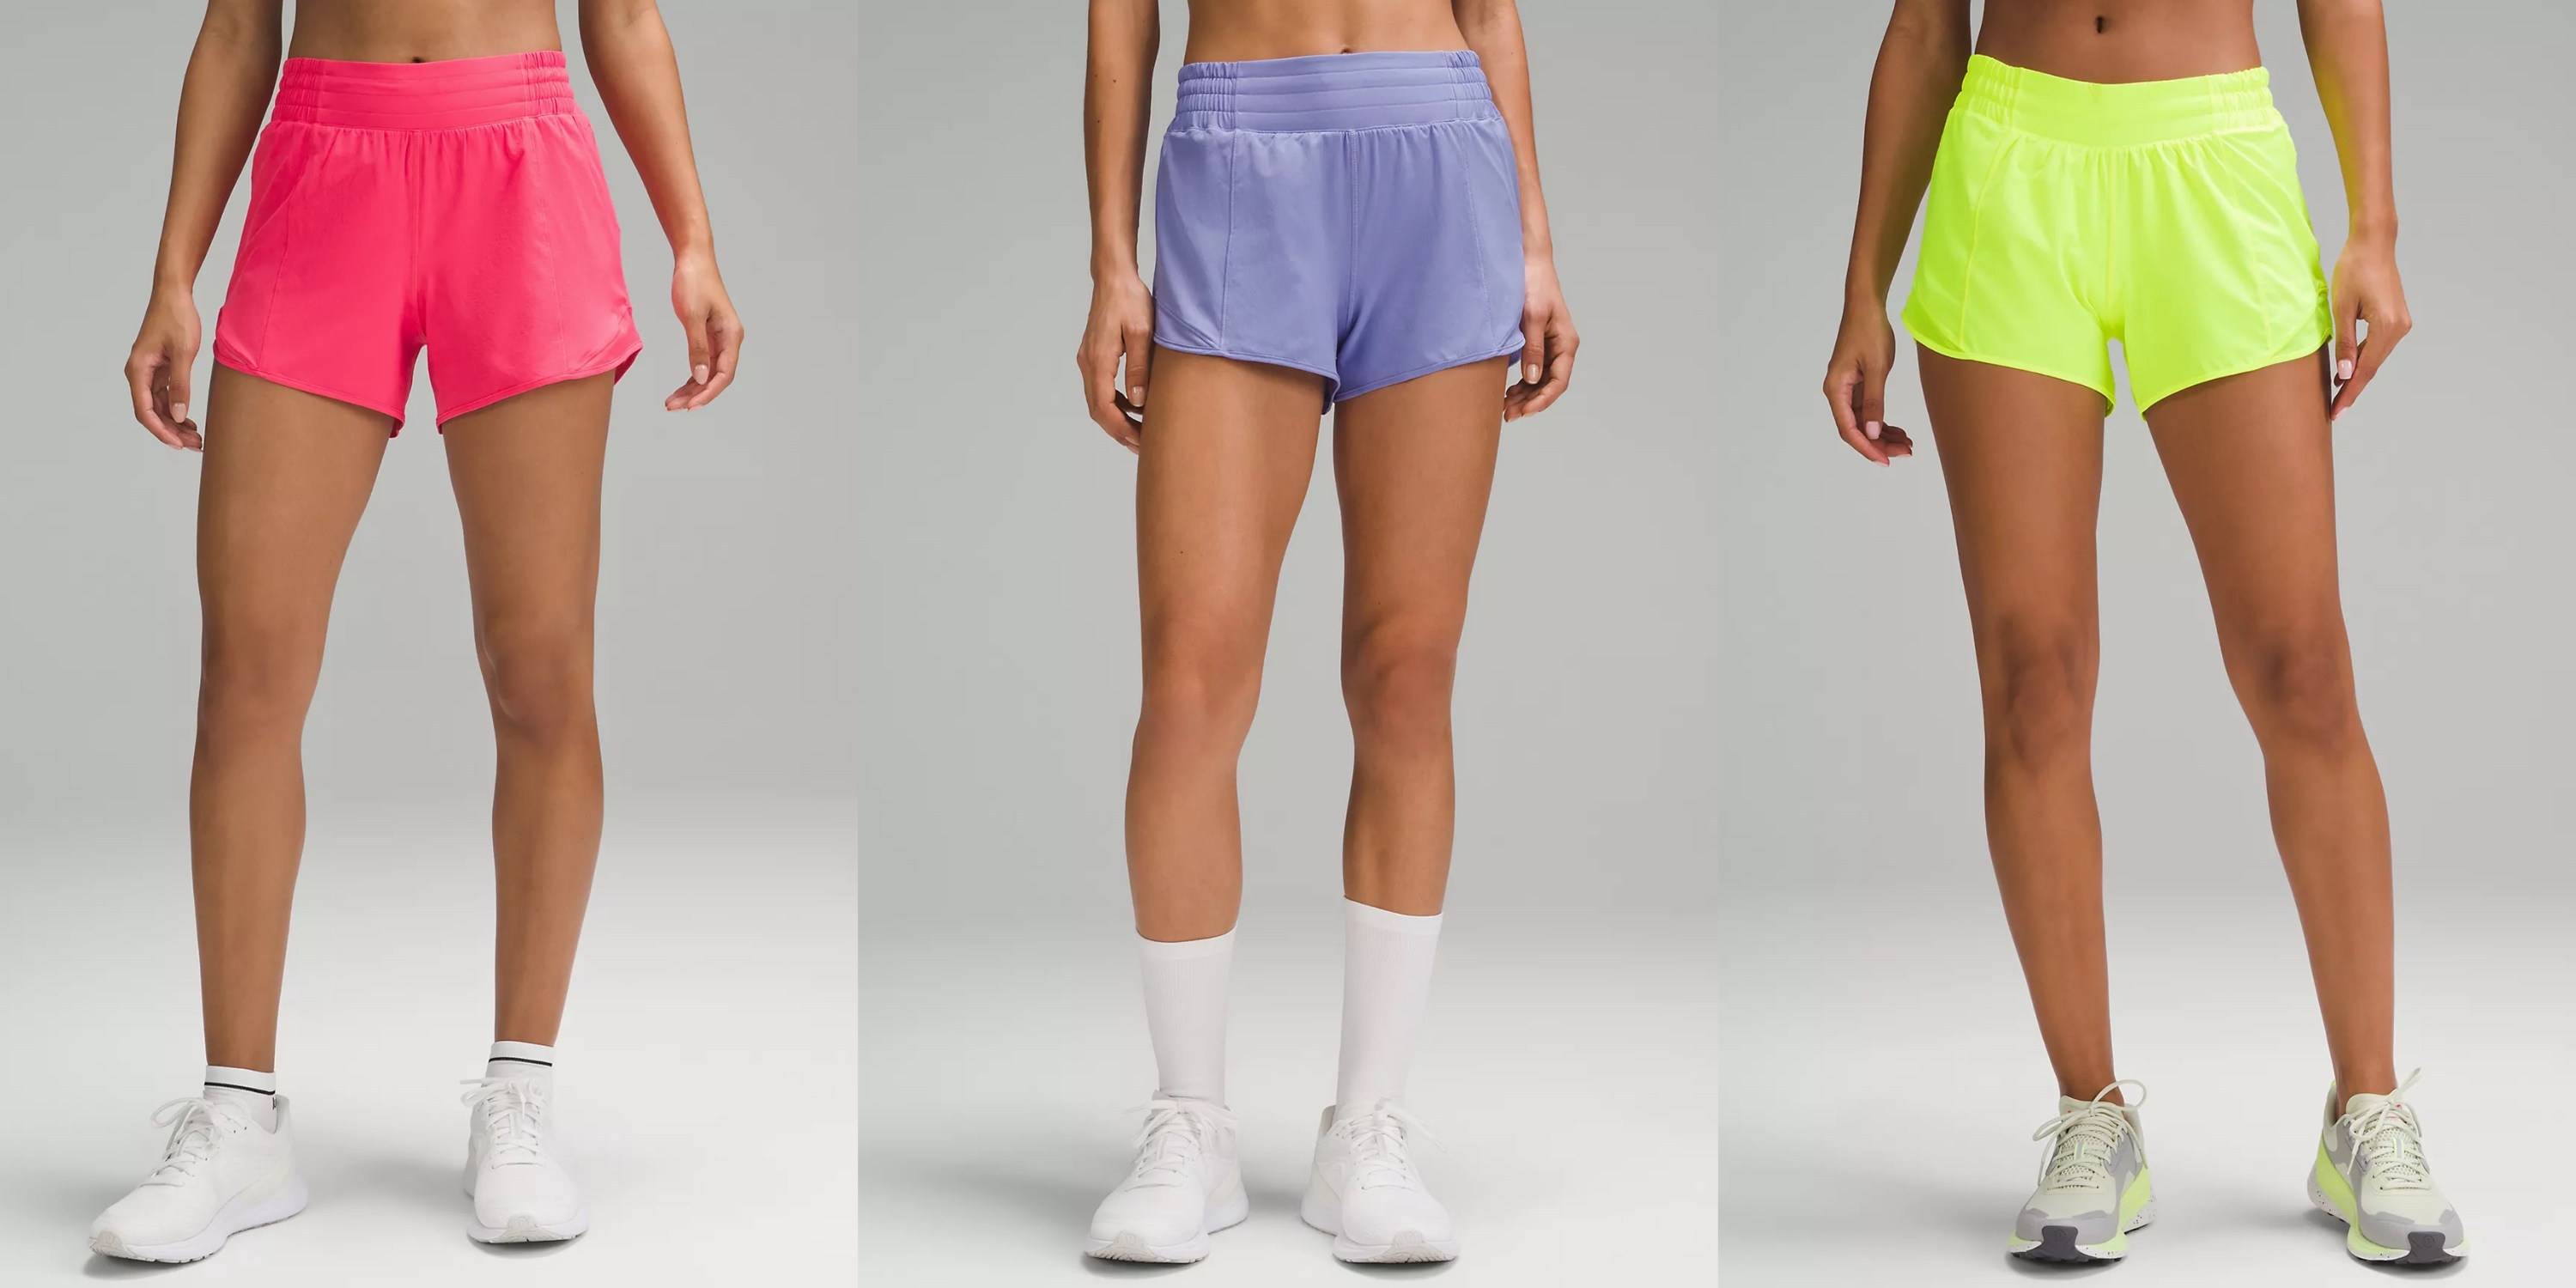 Cinchable Waist High-Rise Woven Short 3.5, Women's Shorts